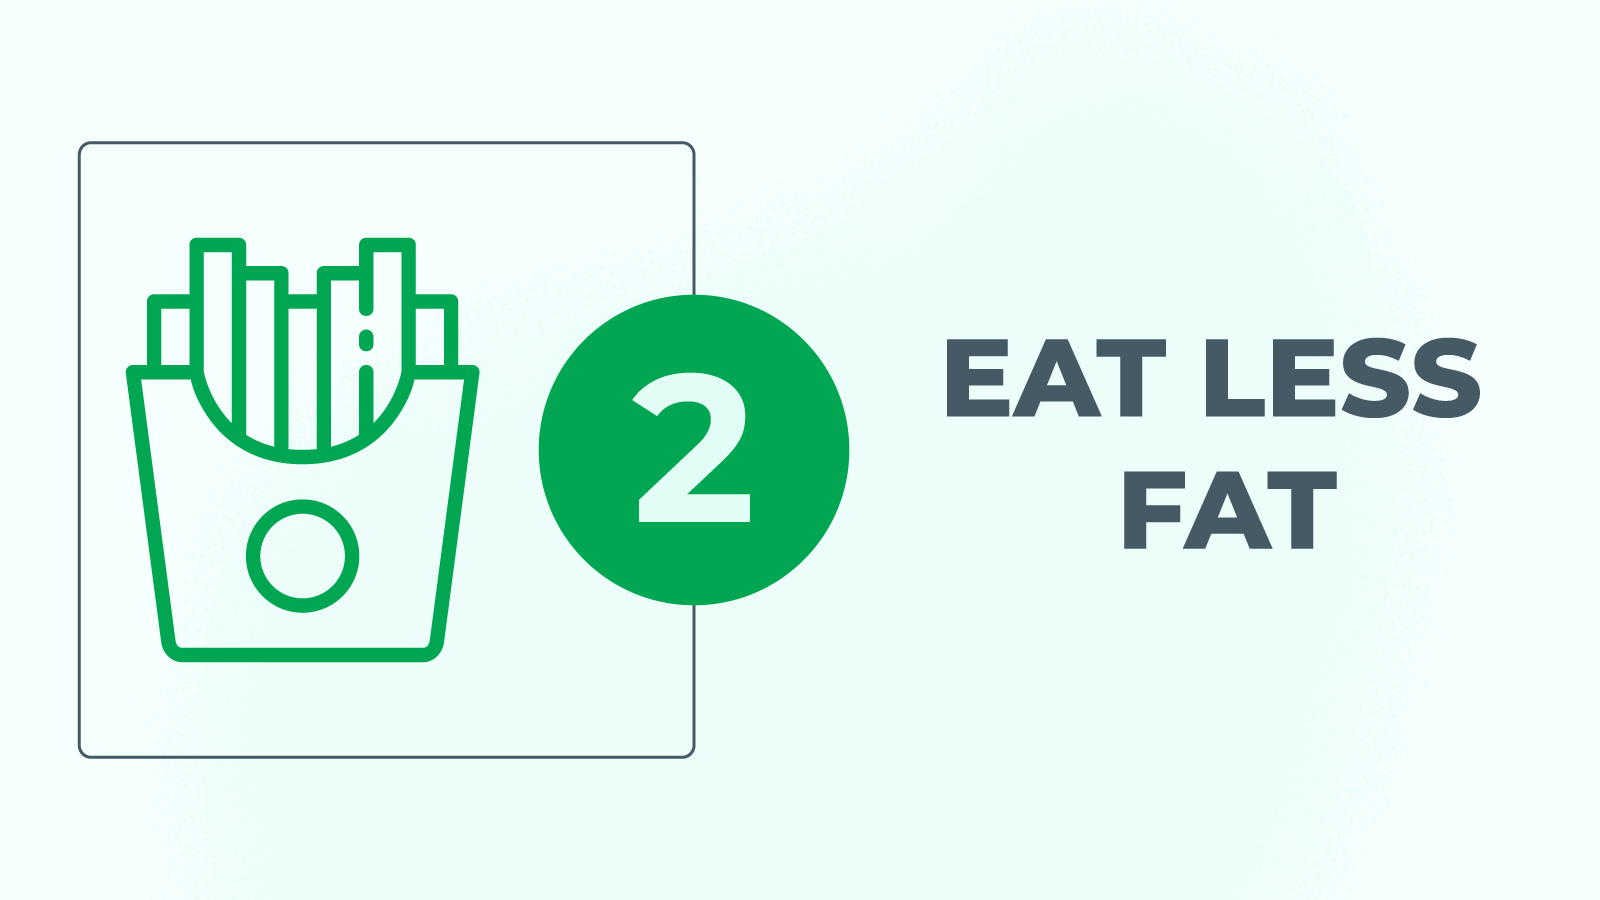 Eat less fat